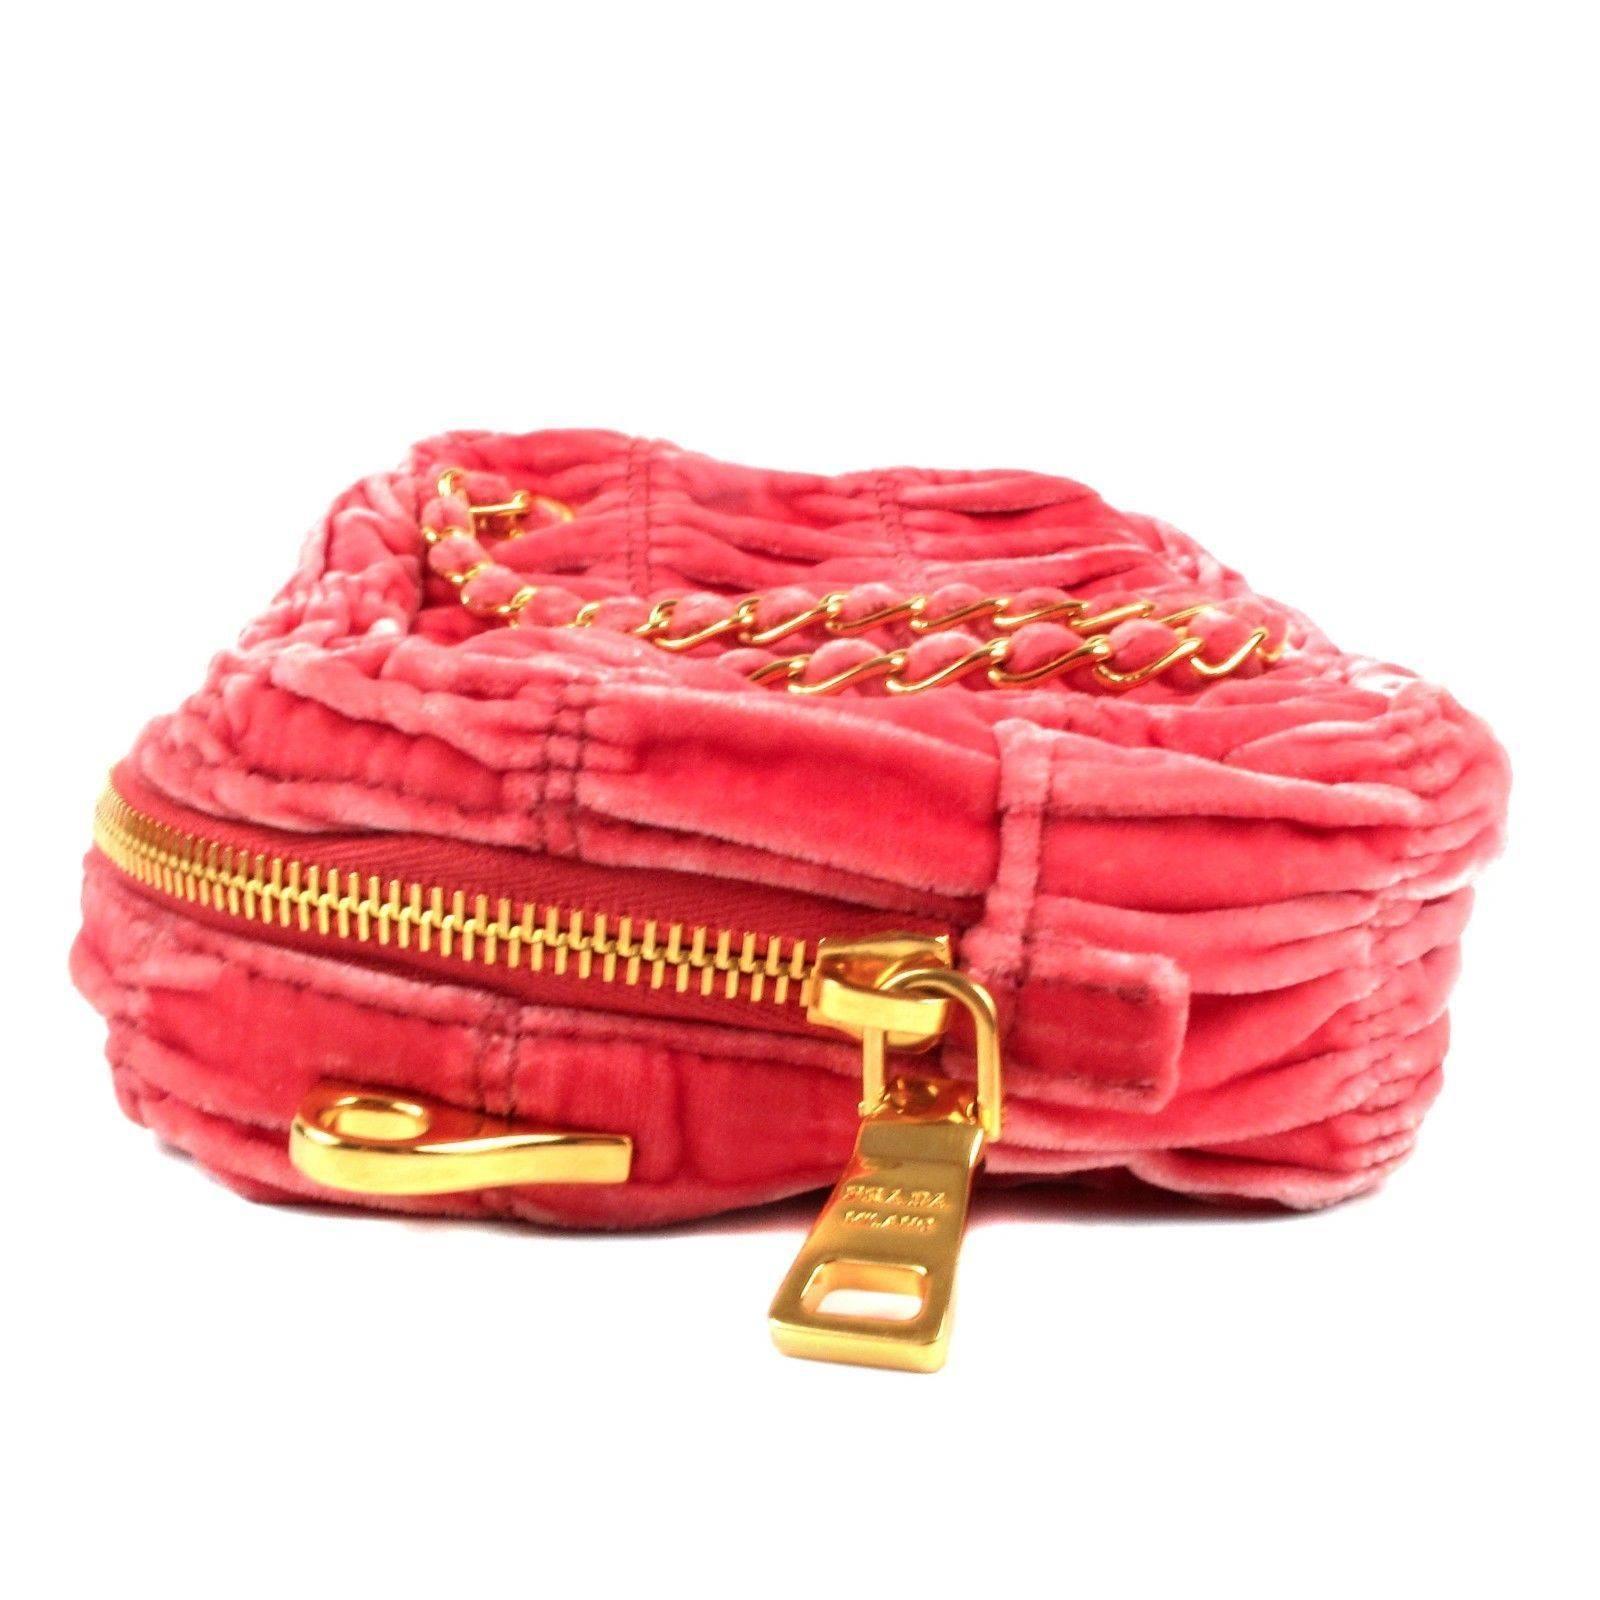 Color: Pink

Material: Velvet

------------------------------------------------------------

Details:

- detachable long crossbody shoulder strap

- can be worn as a shoulder bag or satchel handbag

- dual woven chain handles

- gold